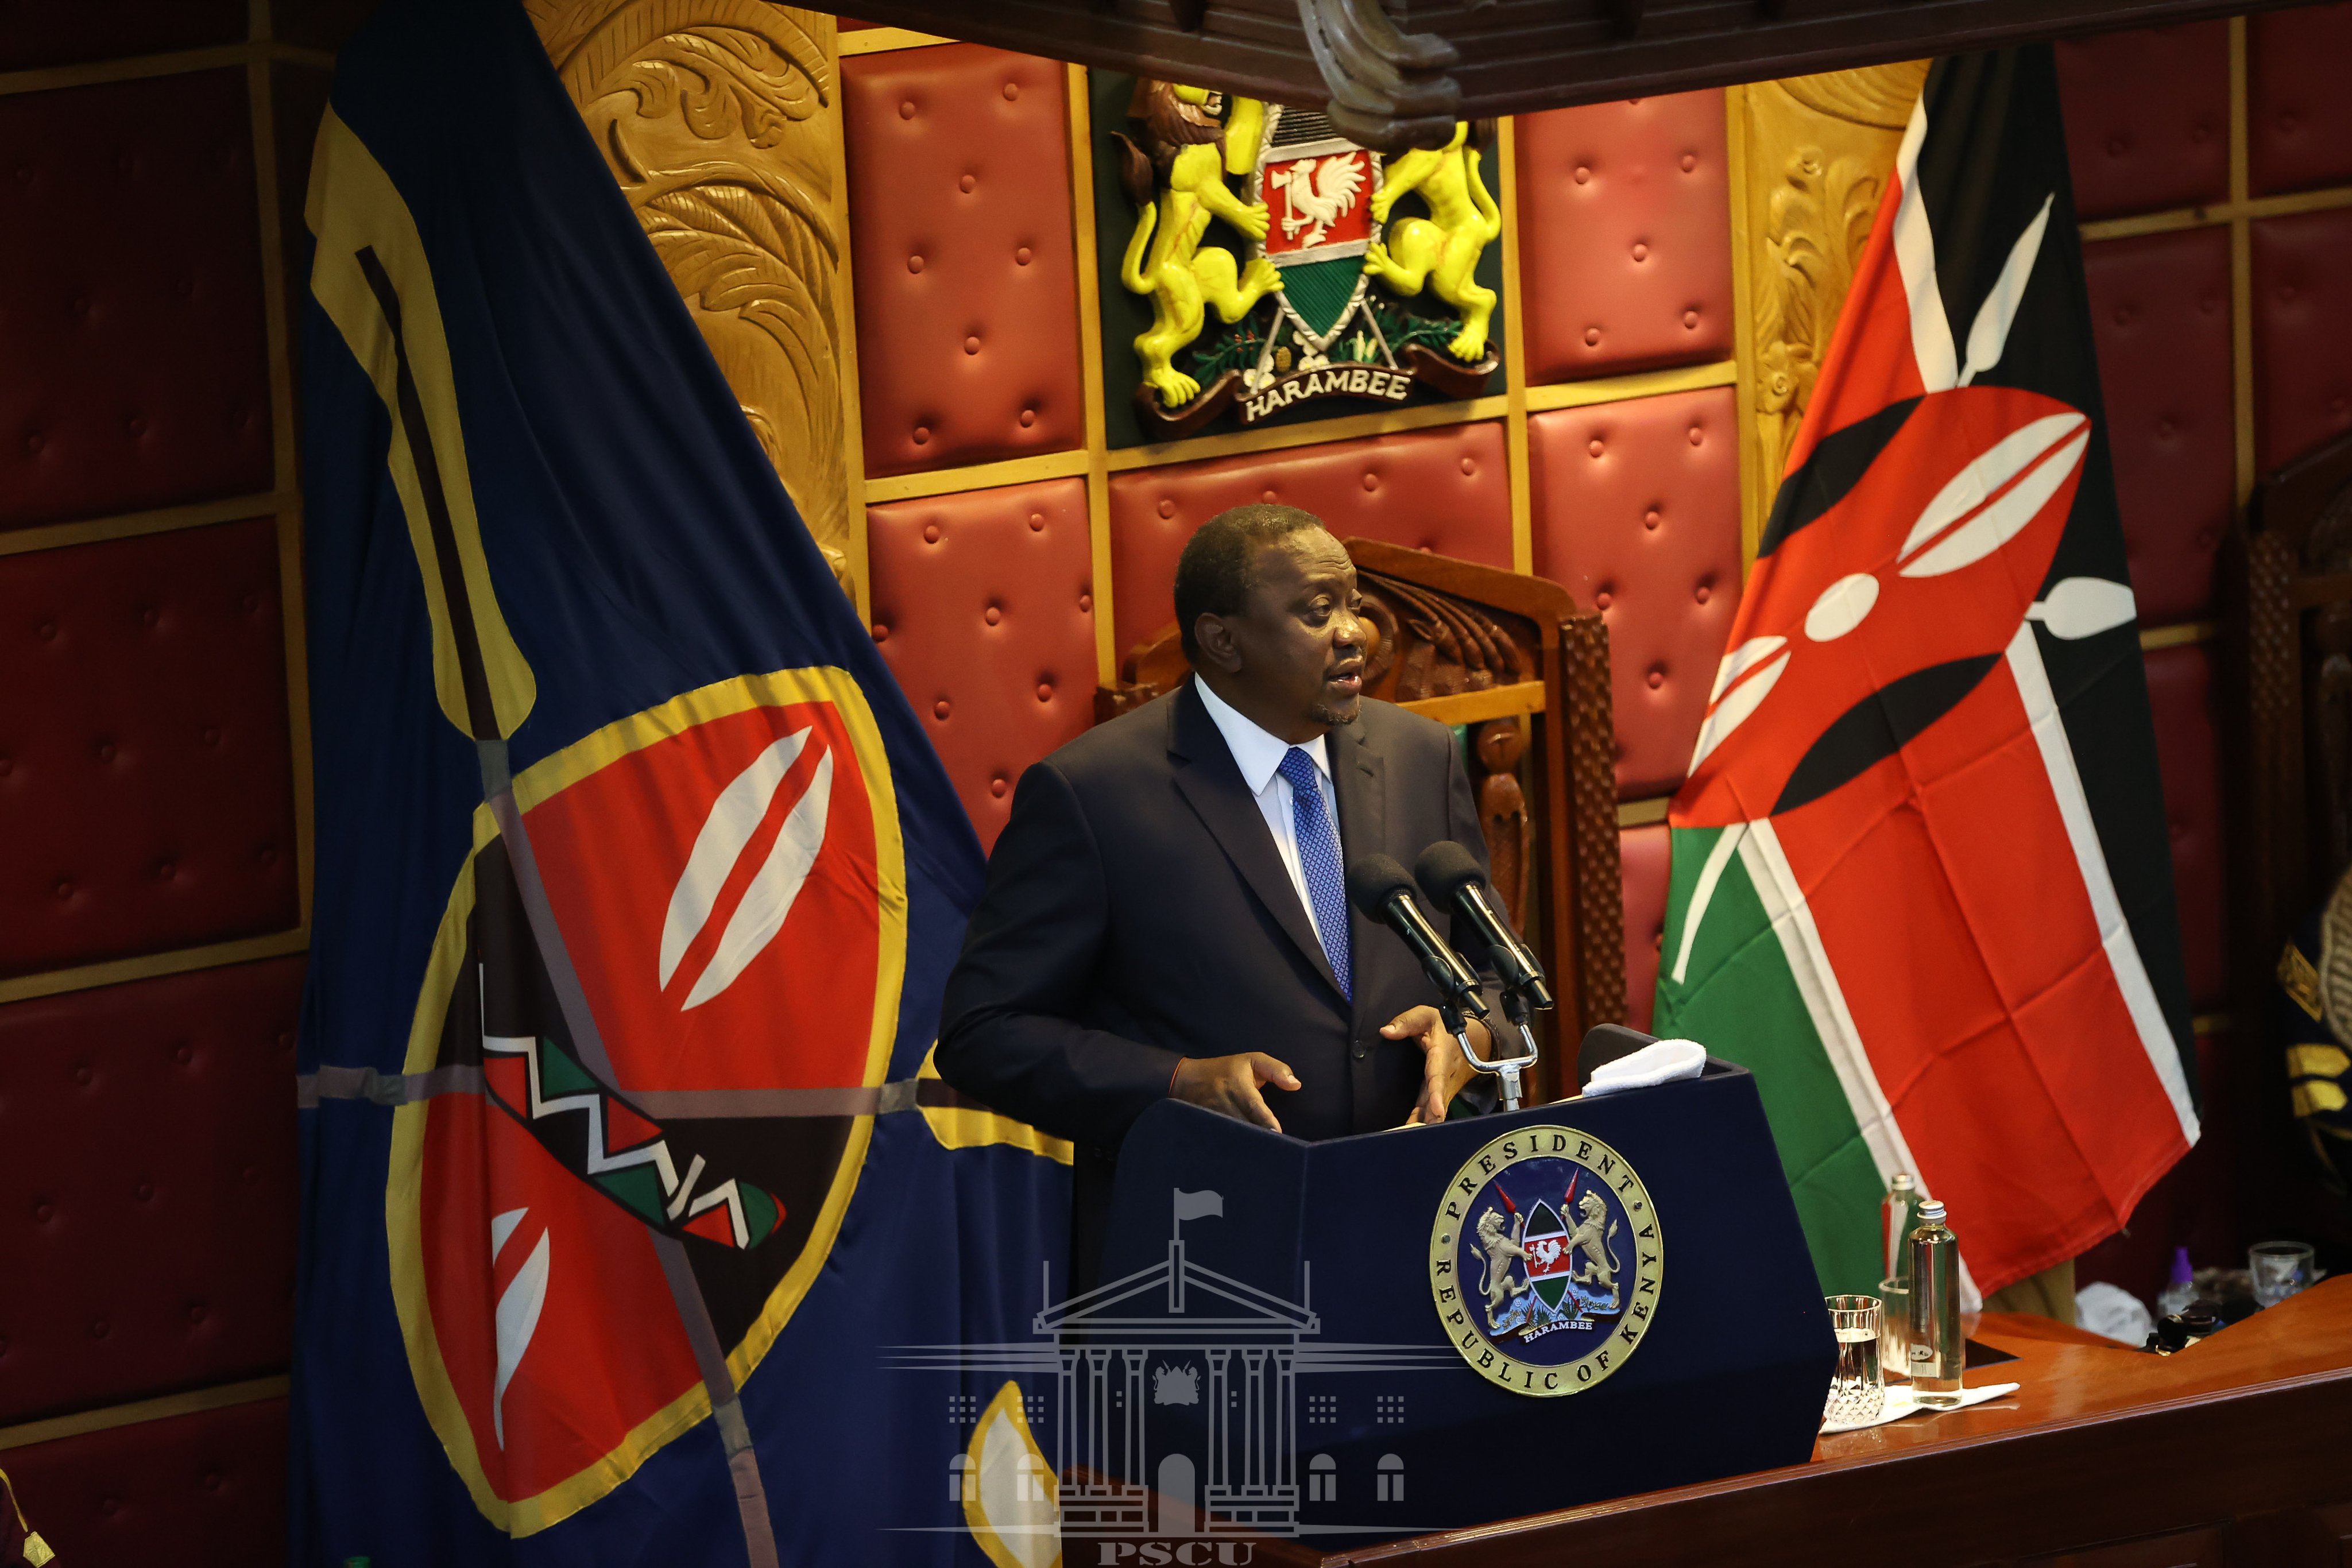 Kenya: Kenyatta ensures commitment to reform health sector, says 'moral decay' has affected society